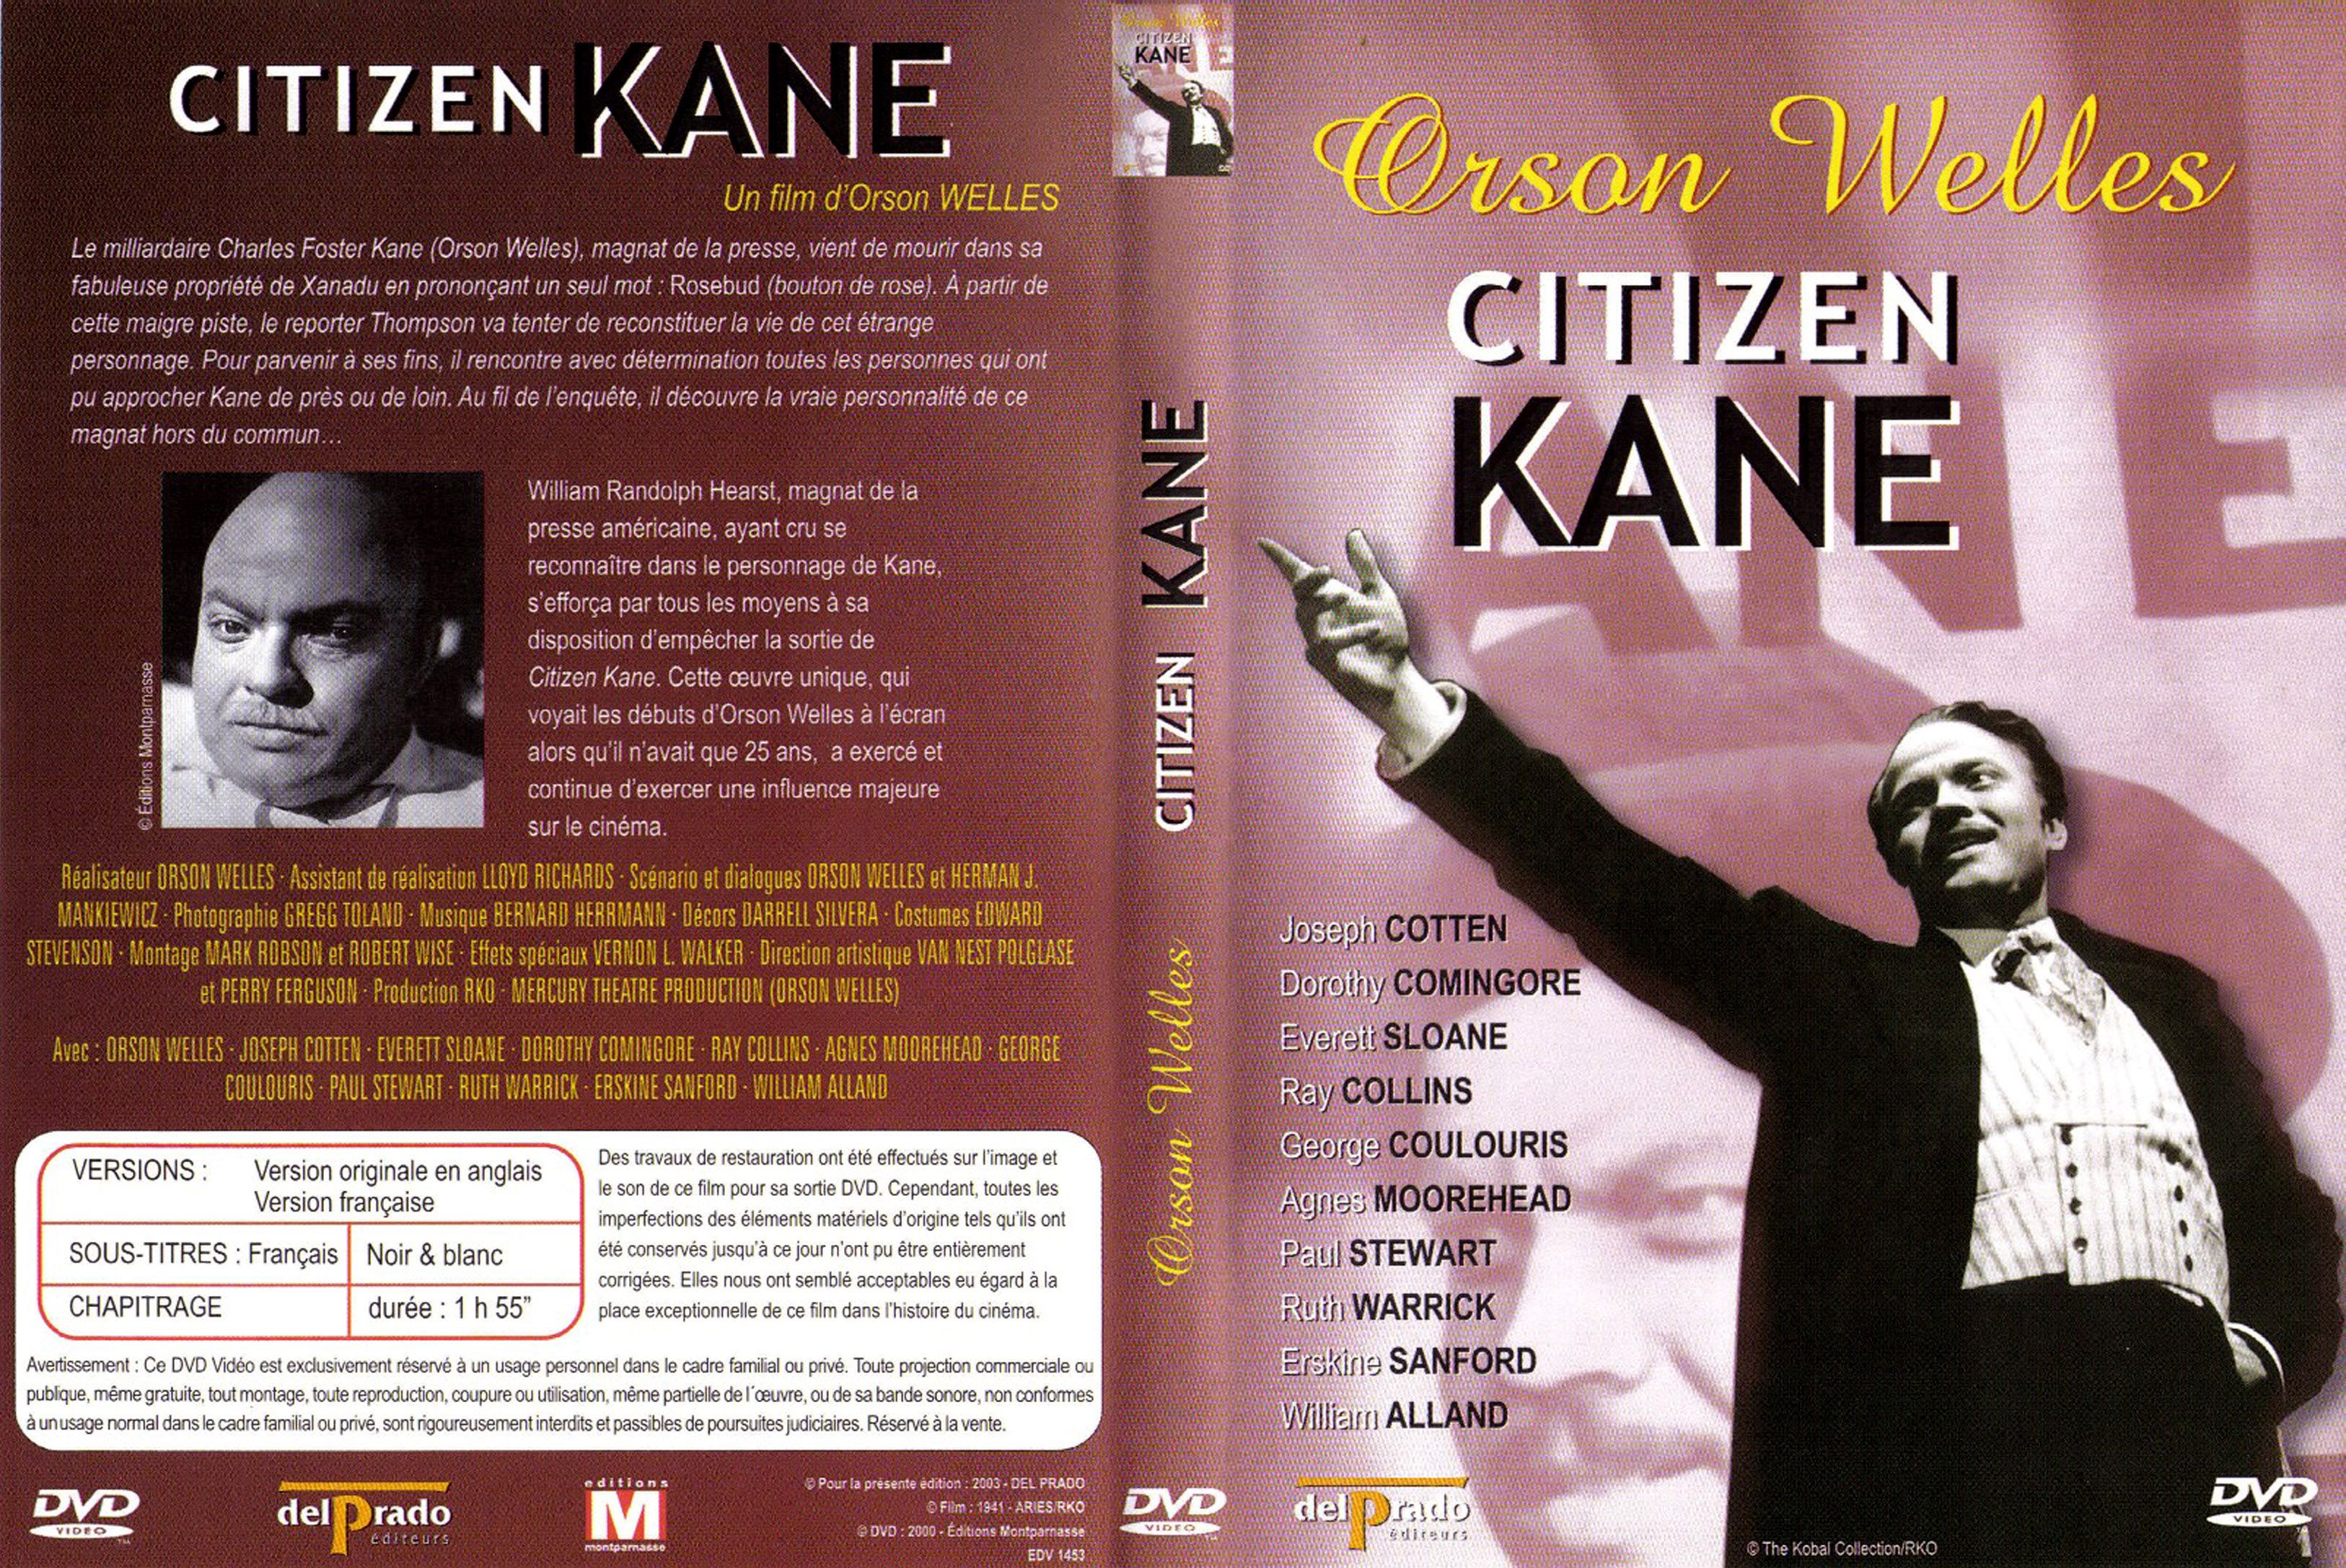 Jaquette DVD Citizen kane